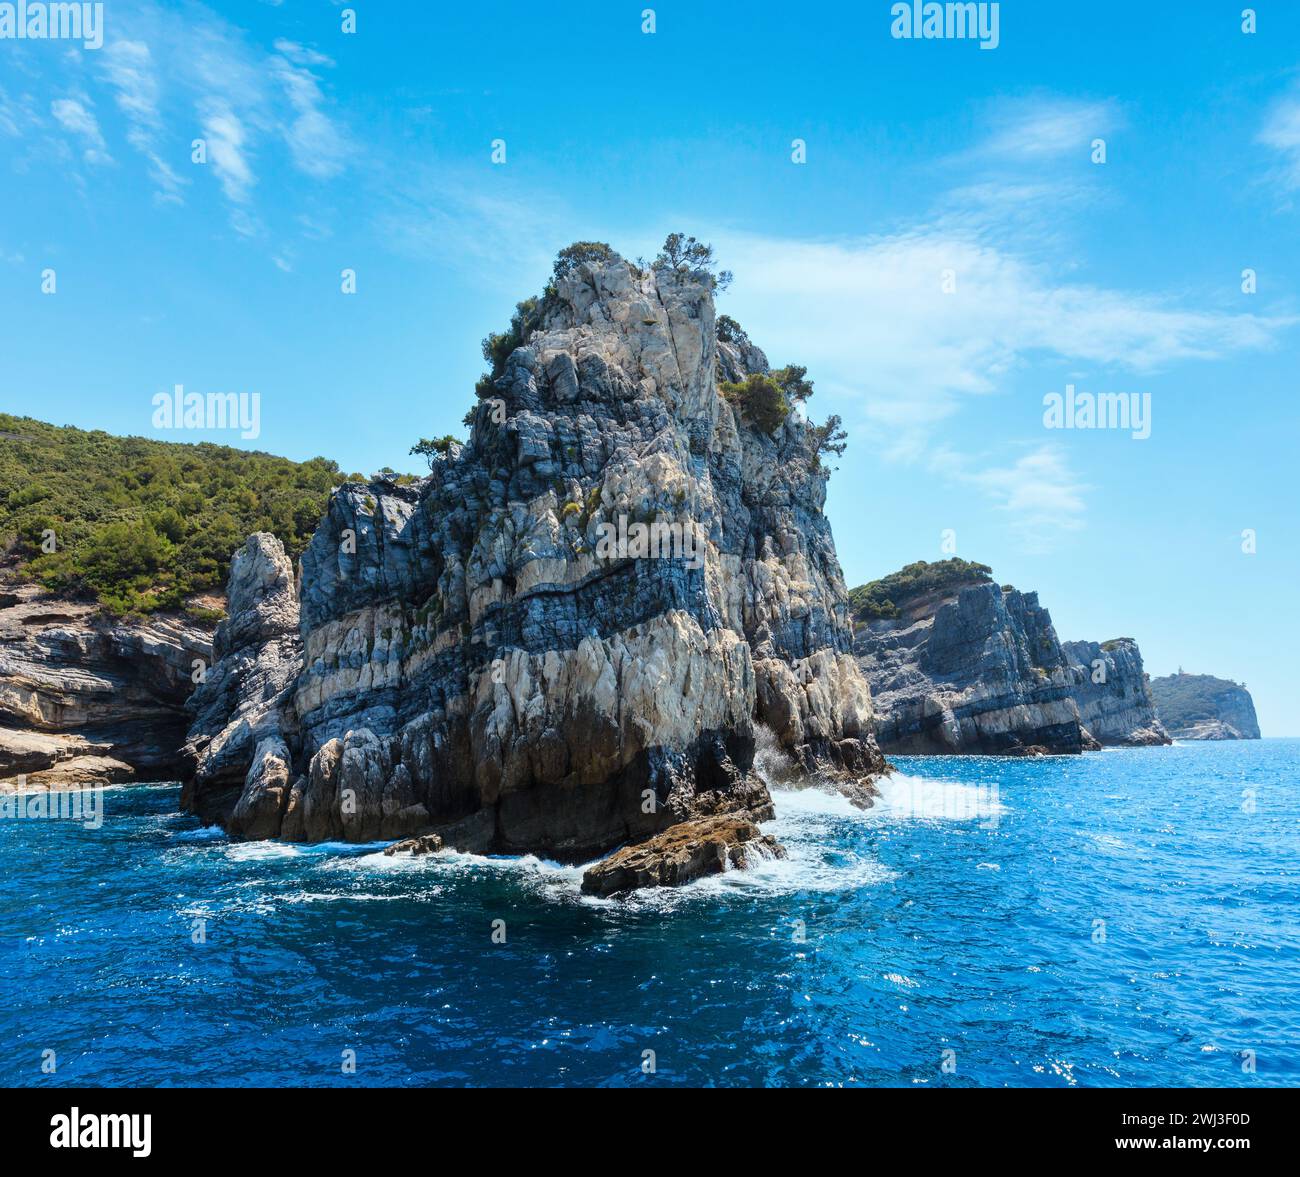 Palmaria island, La Spezia, Italy Stock Photo